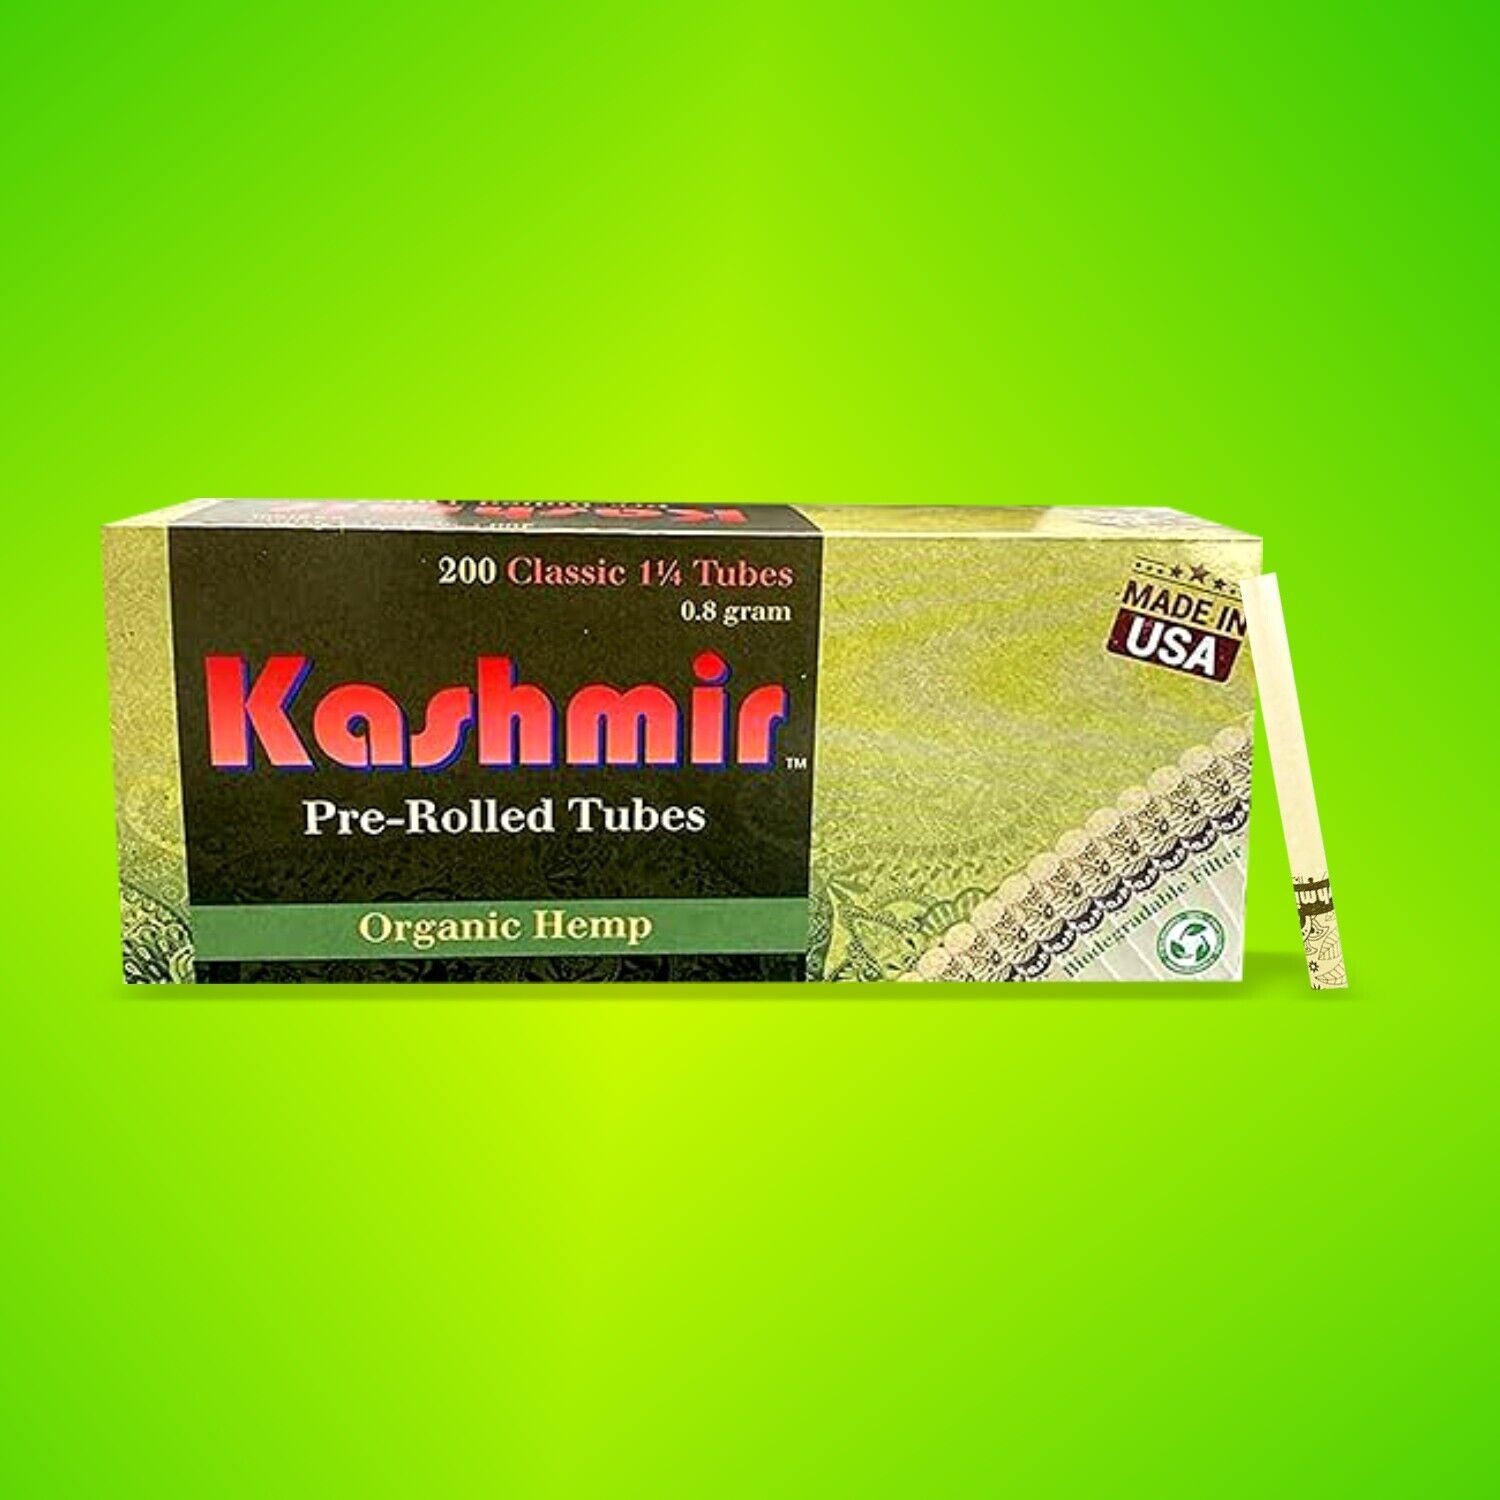 Kashmir Organic Hemp Tubes 1-1/4 Size Pre Rolled Cigarette Filter Tubes 200 Pack